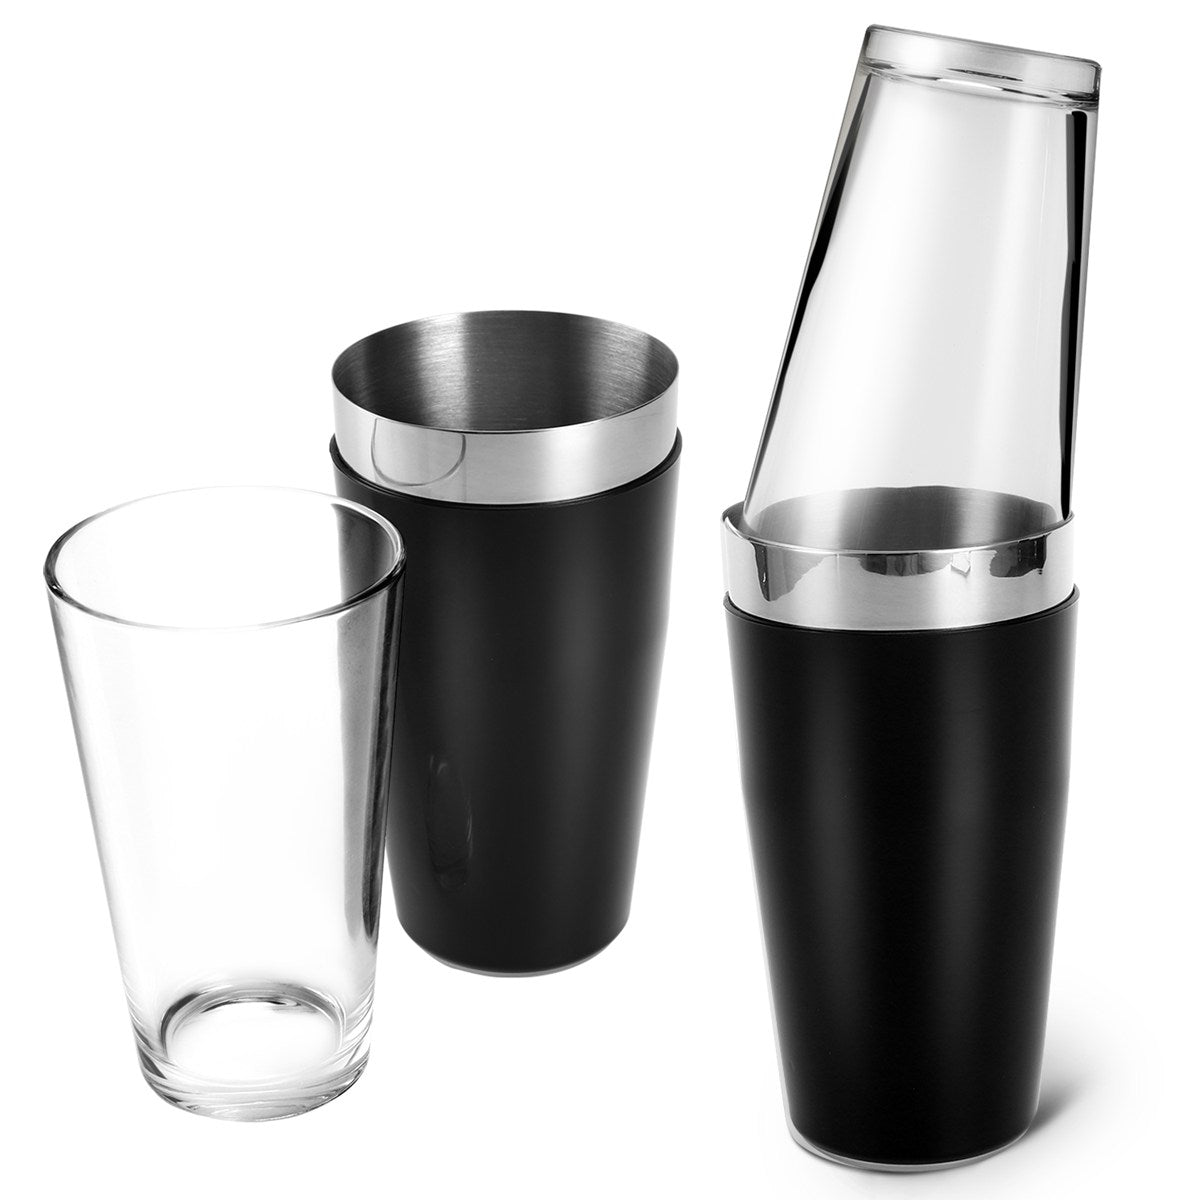 Cocktail oz BARsics 16 wi and Shaker, Stainless – Steel fl fl 26 oz Glass Boston